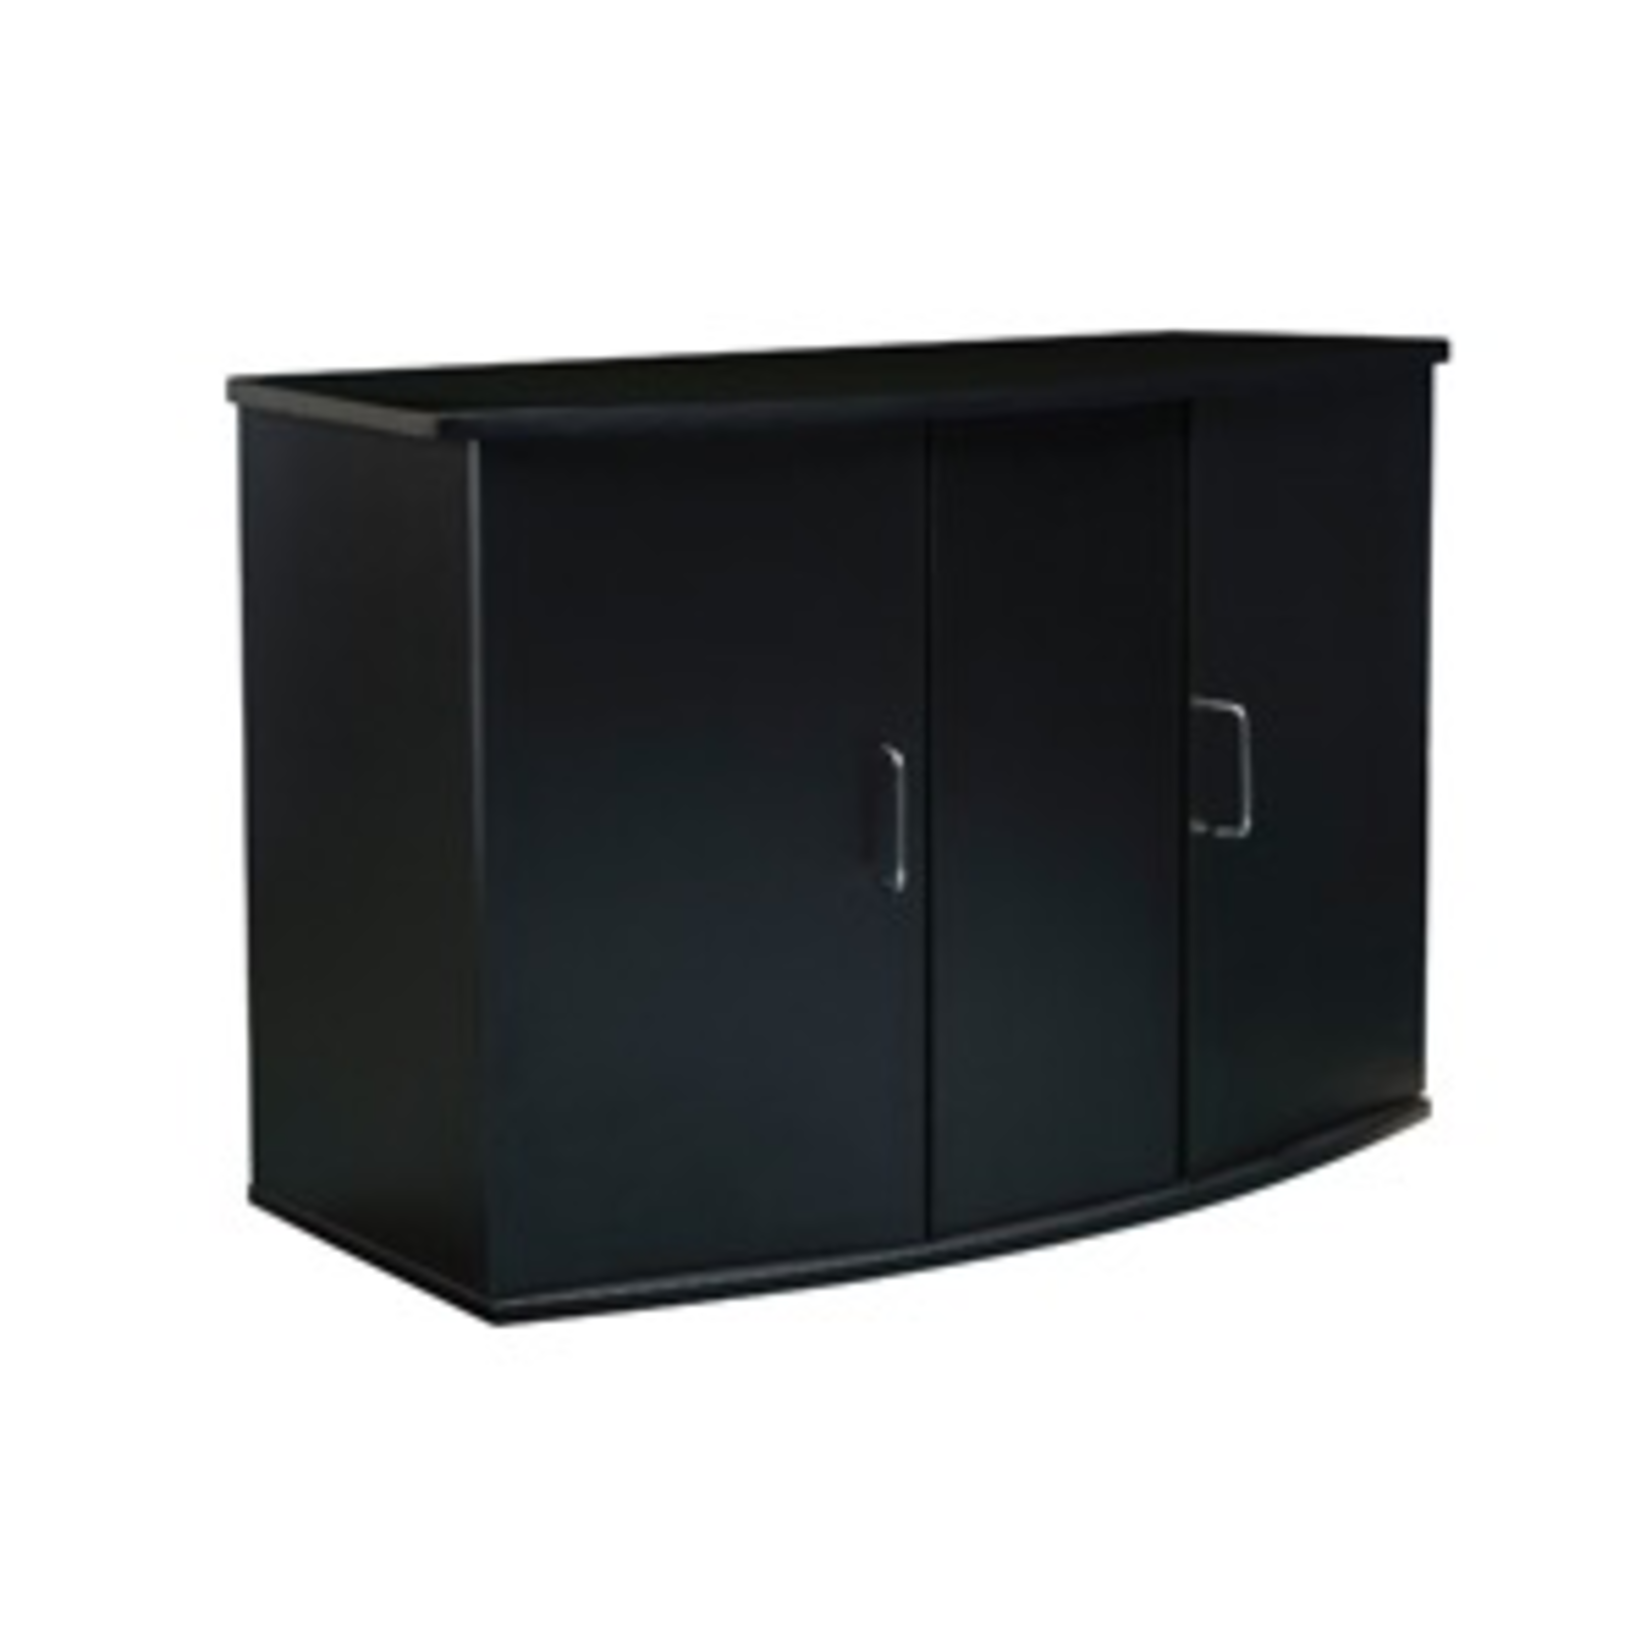 FLUVAL (W) Fluval Bow Front Aquarium Cabinet - 37" x 16.5" x 26" (94 cm x 42 cm x 66 cm) - Black